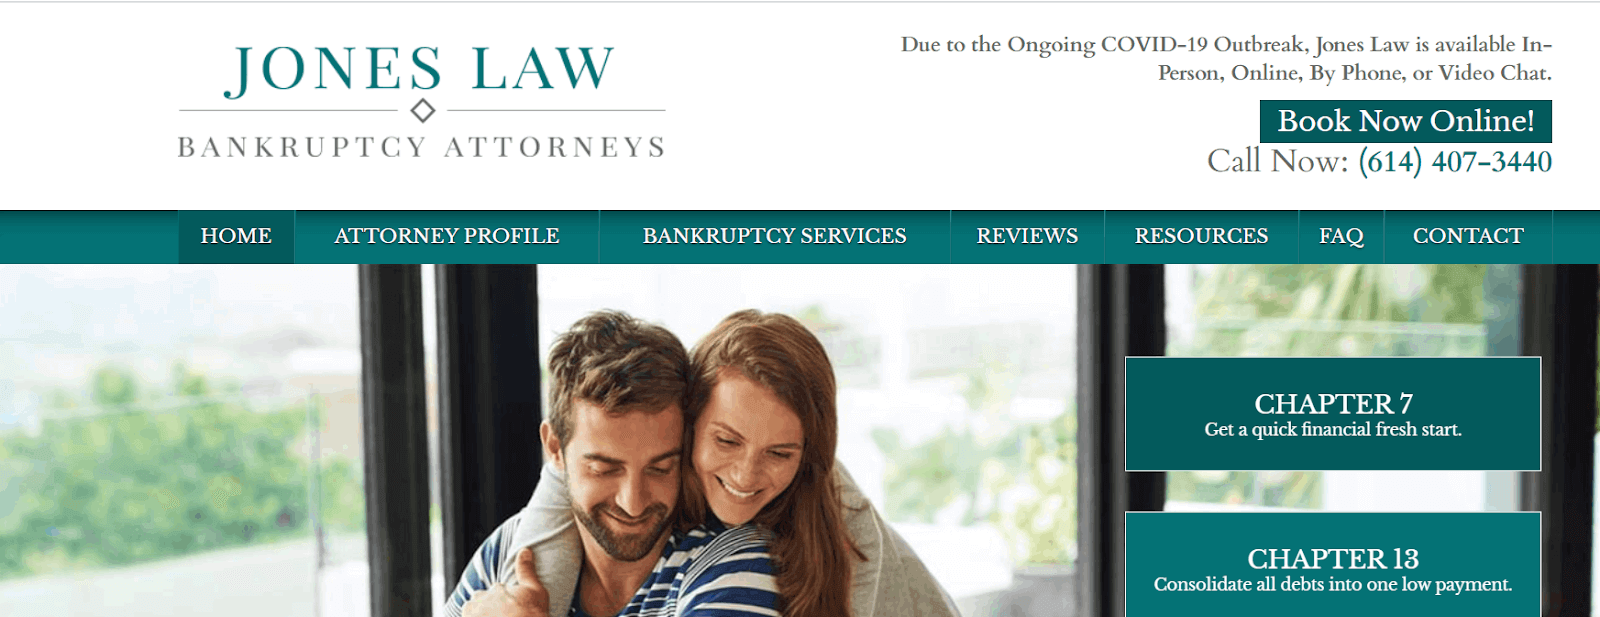 The Jones Law Firm Homepage